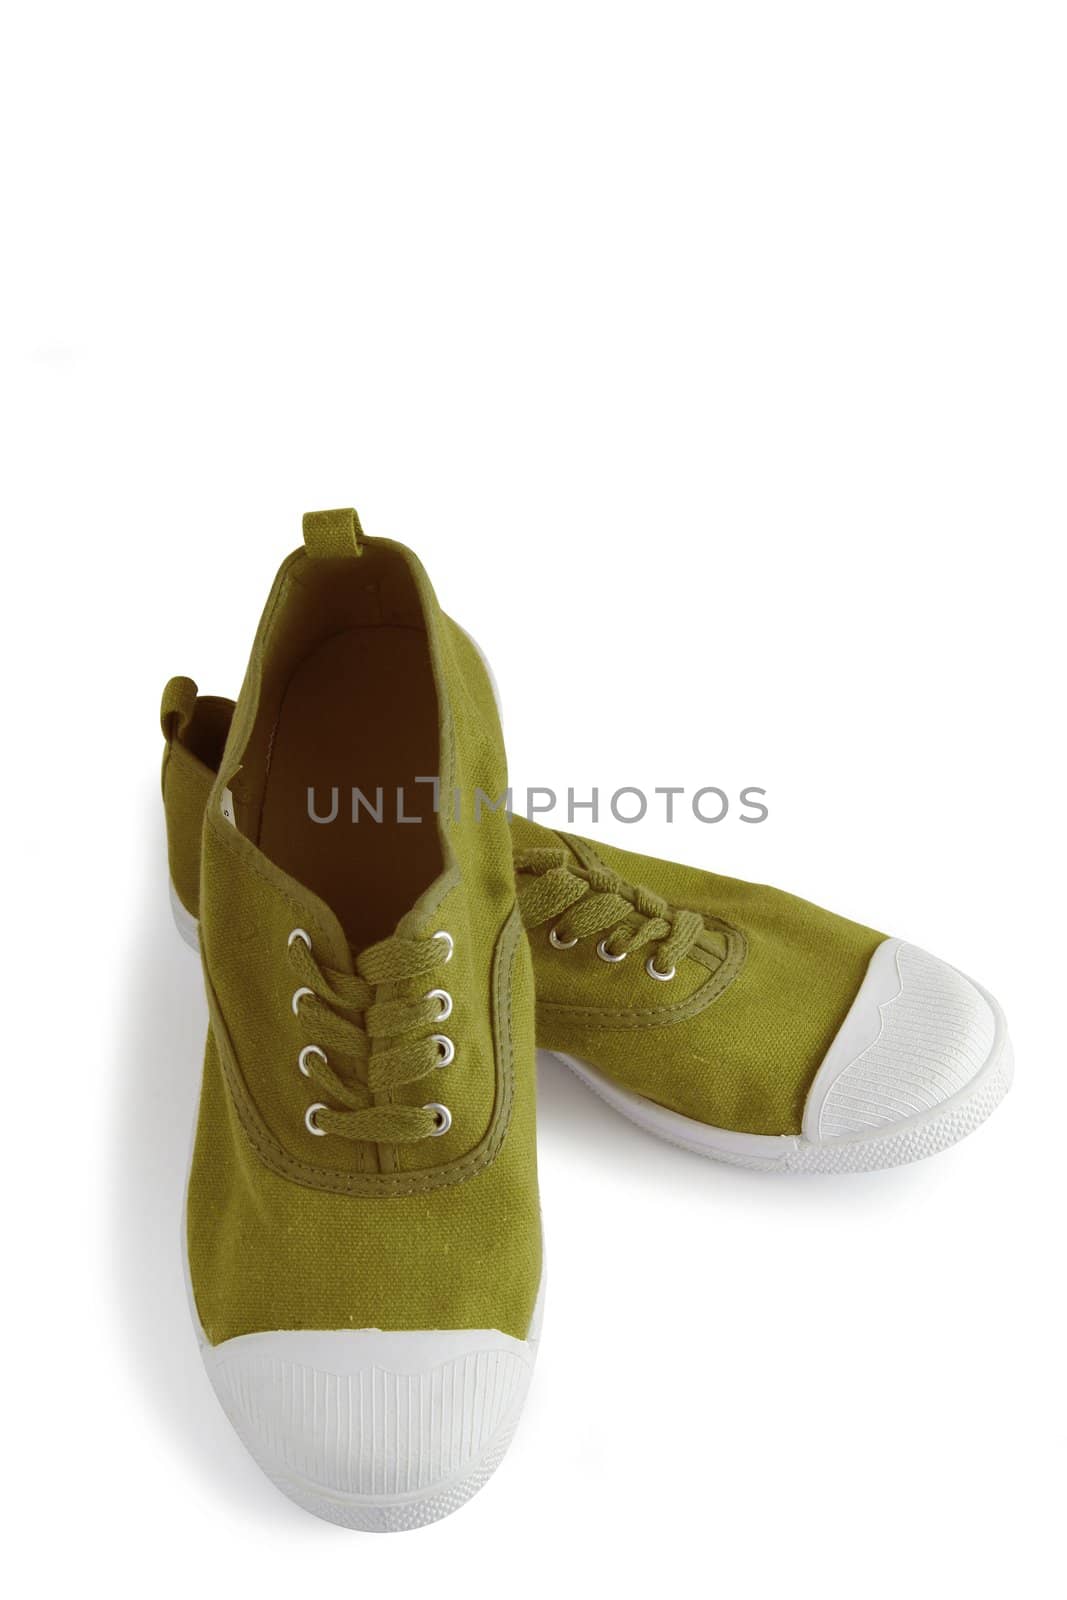 Green sneakers by phovoir